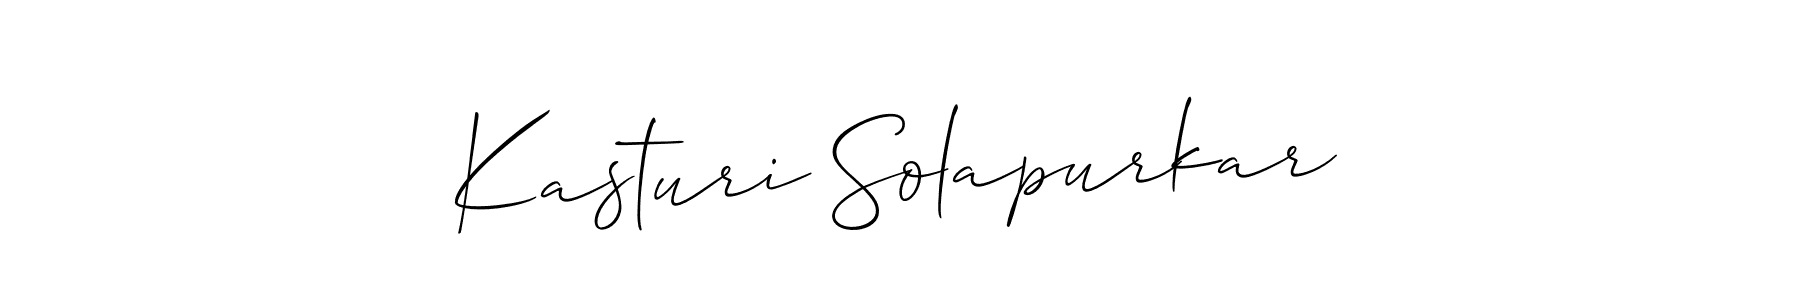 How to make Kasturi Solapurkar signature? Allison_Script is a professional autograph style. Create handwritten signature for Kasturi Solapurkar name. Kasturi Solapurkar signature style 2 images and pictures png